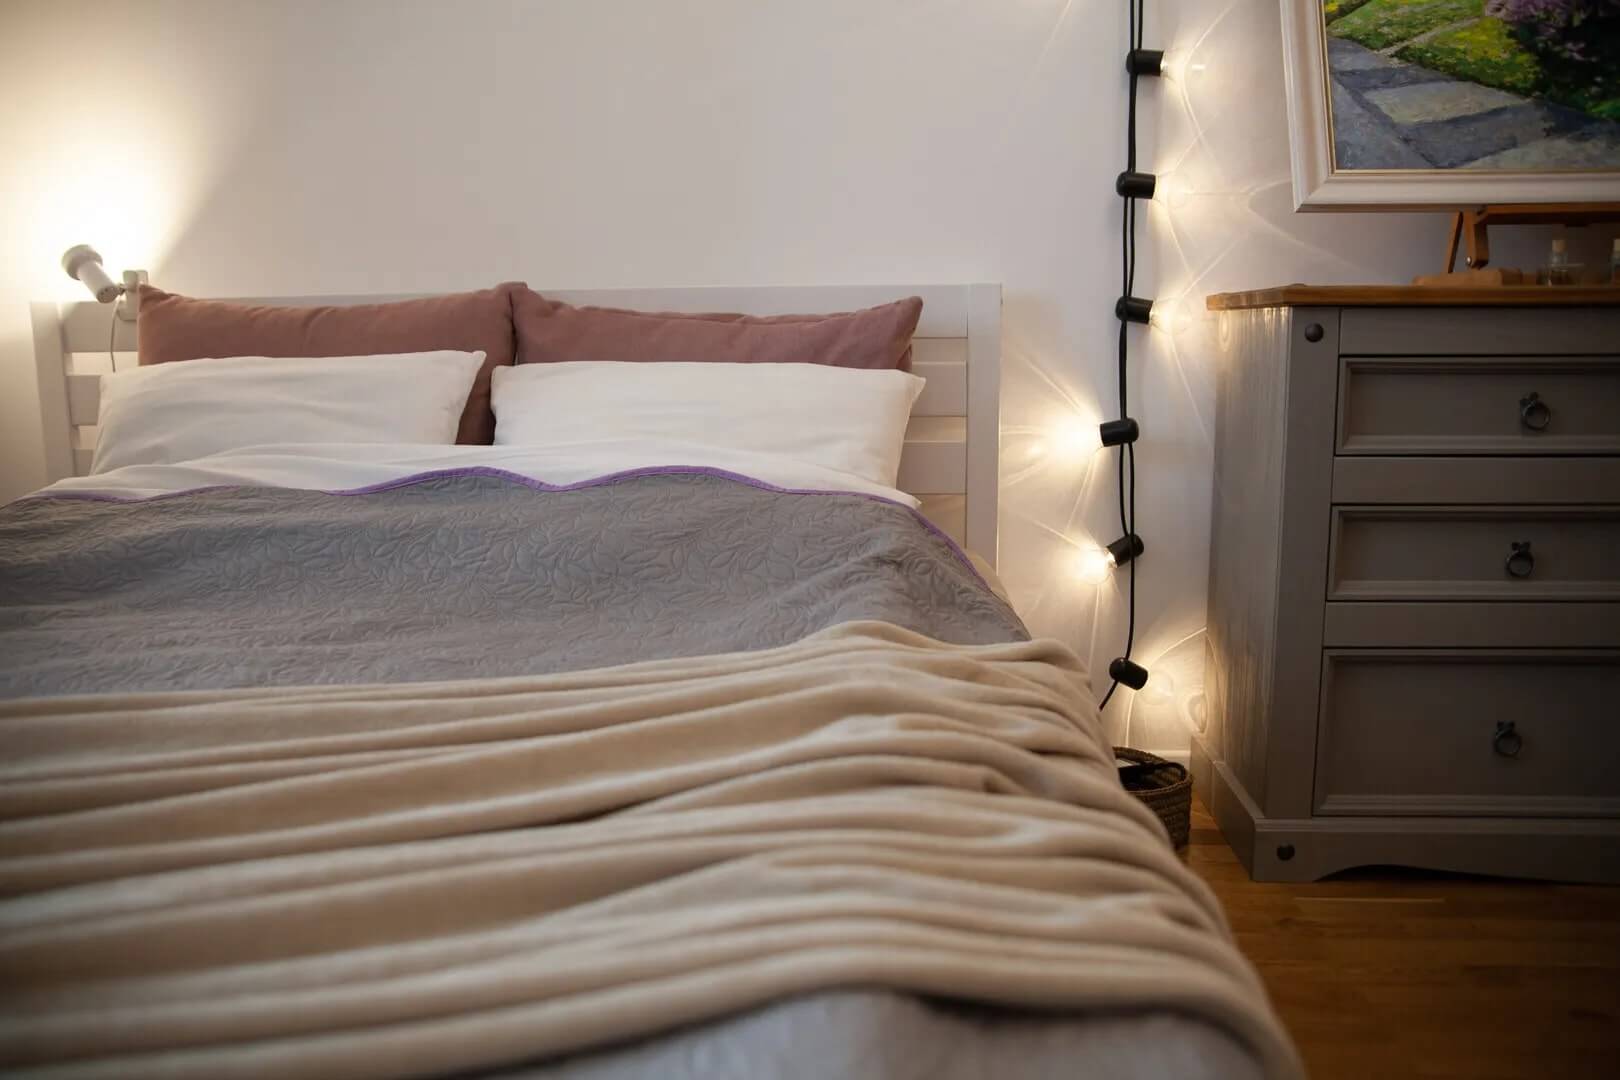 По стене у кровати плетется лиана-гирлянда.